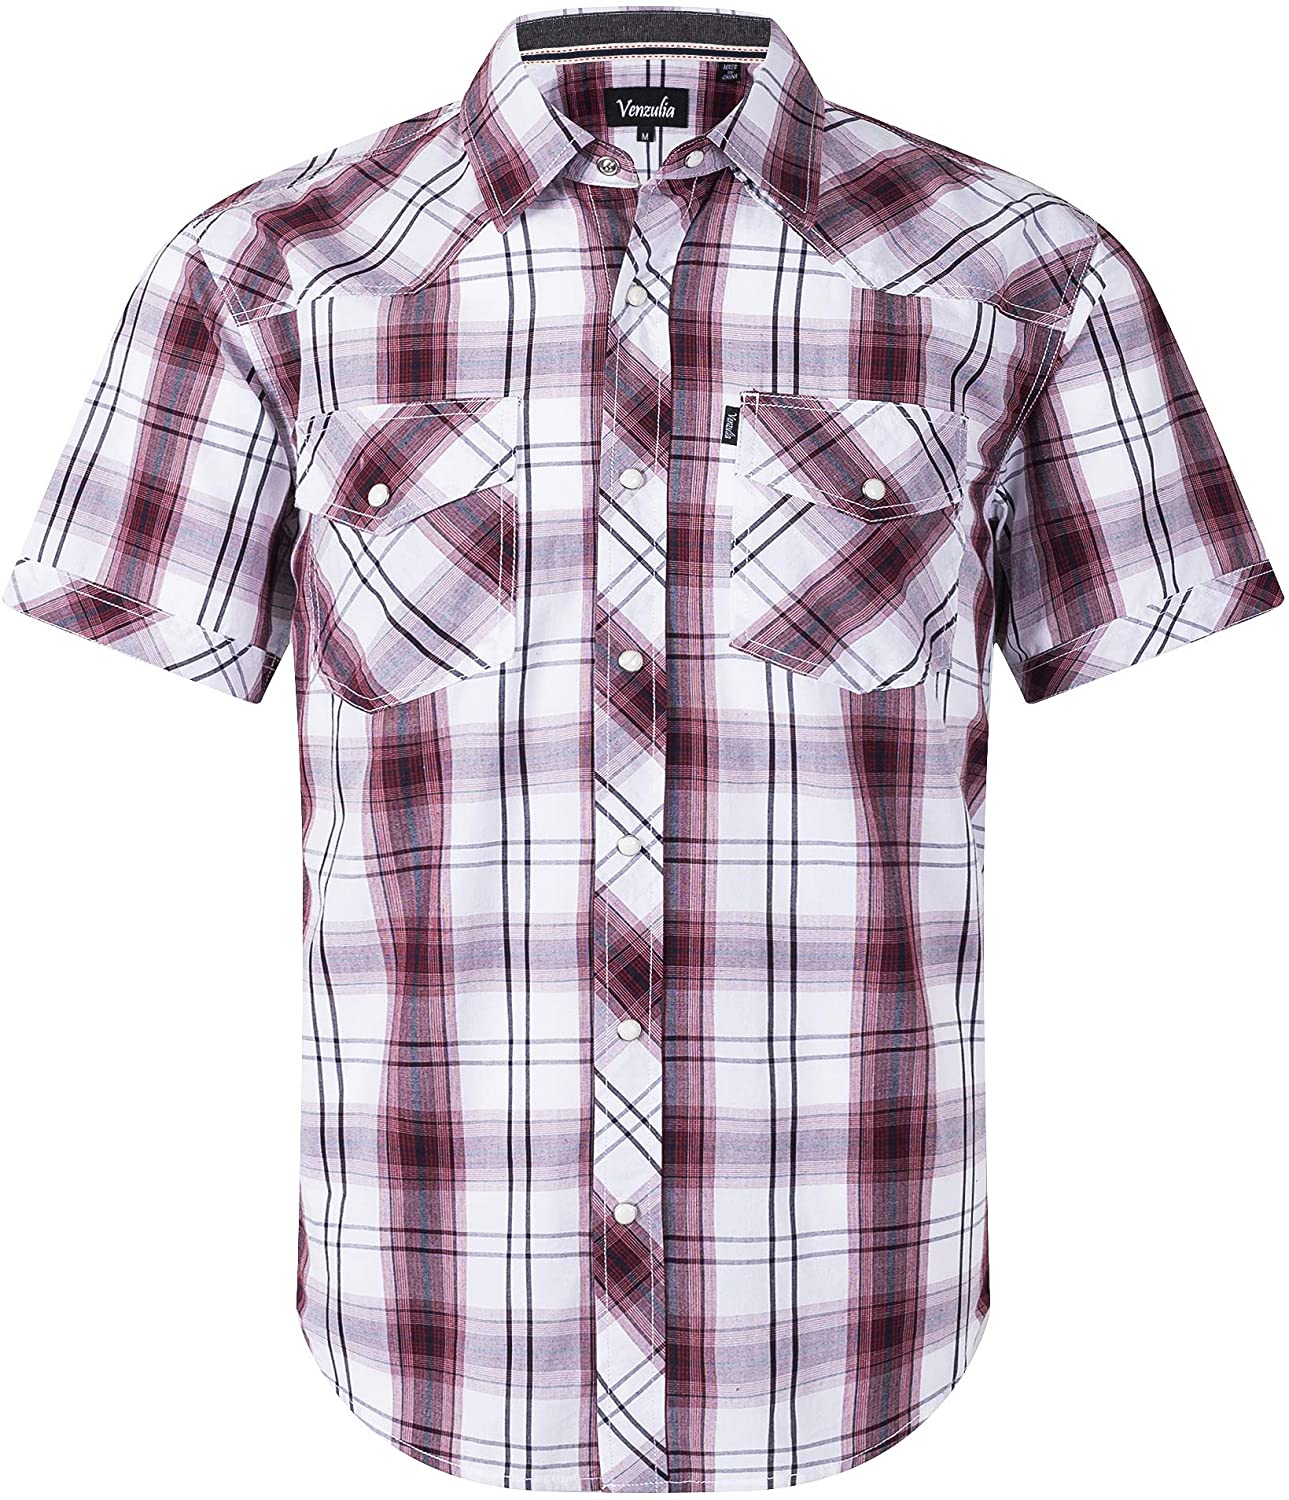 Men's Western Snap Casual Shirt Two Pocket Short Sleeve Shirt